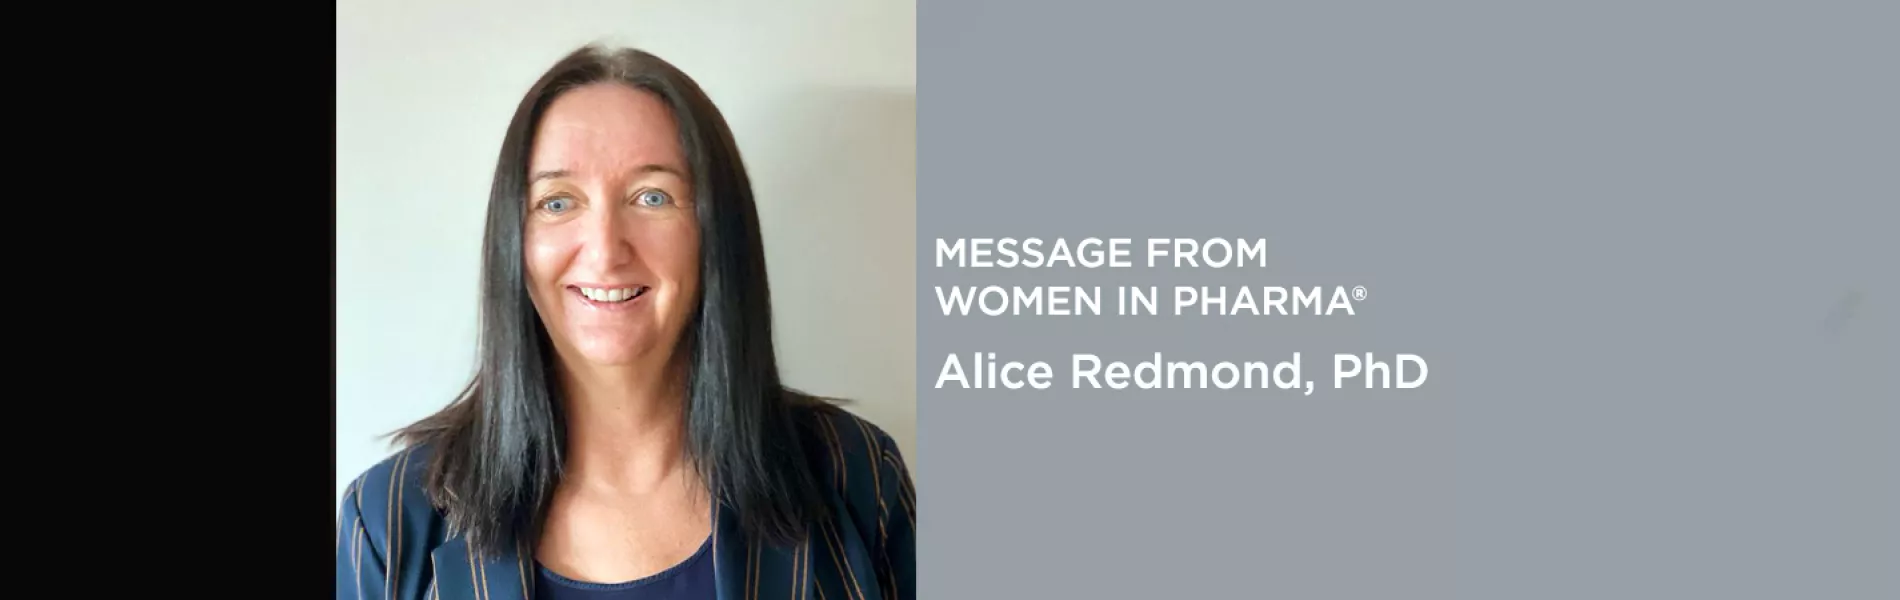 Women in Pharma® Editorial: Alice Redmond, PhD